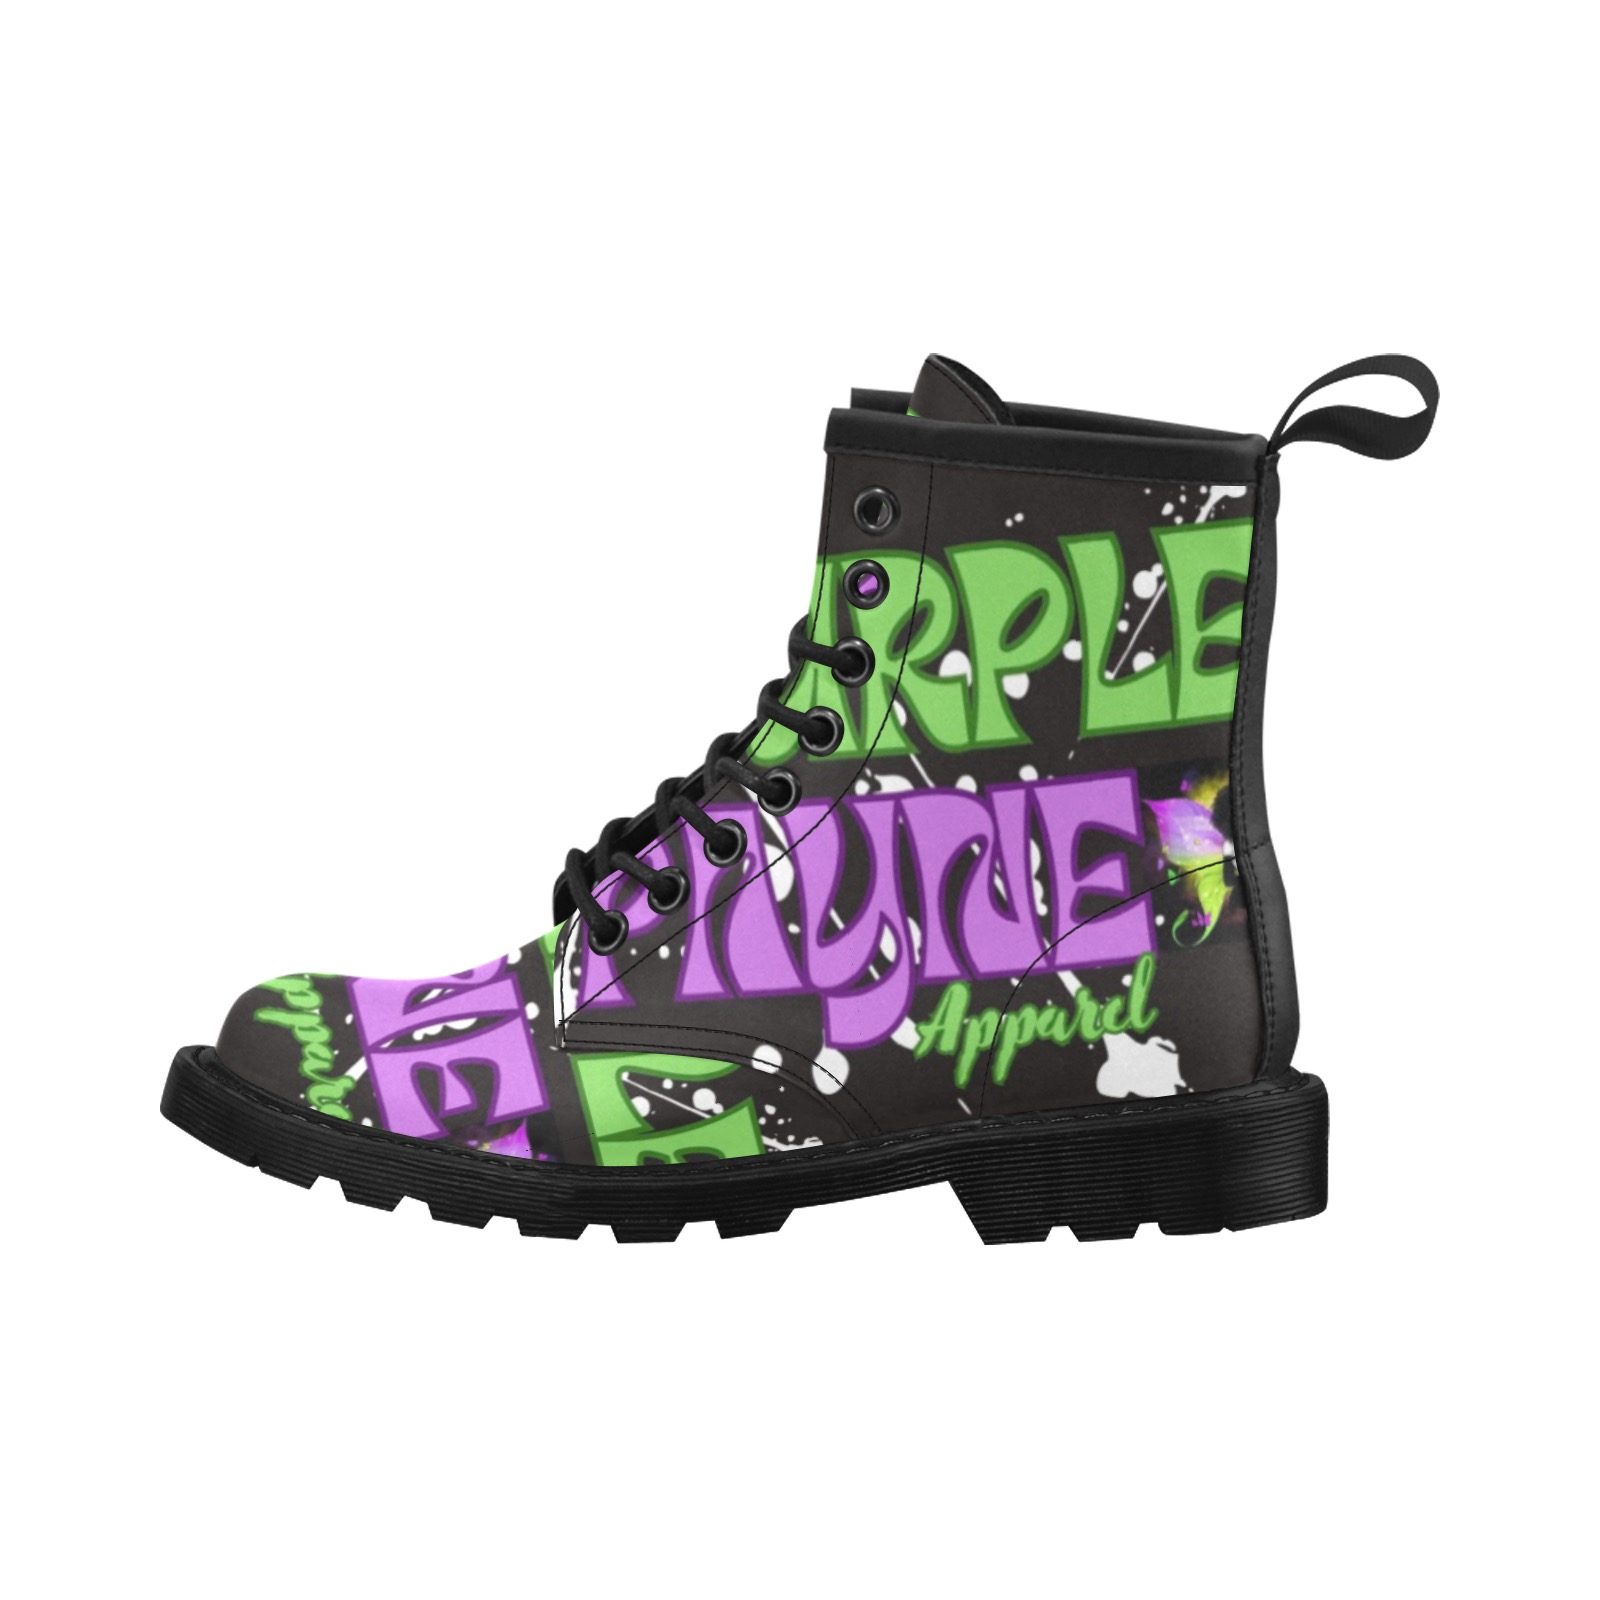 Purple Payne Apparel Men’s Boots Men's PU Leather Martin Boots (Model 402H)